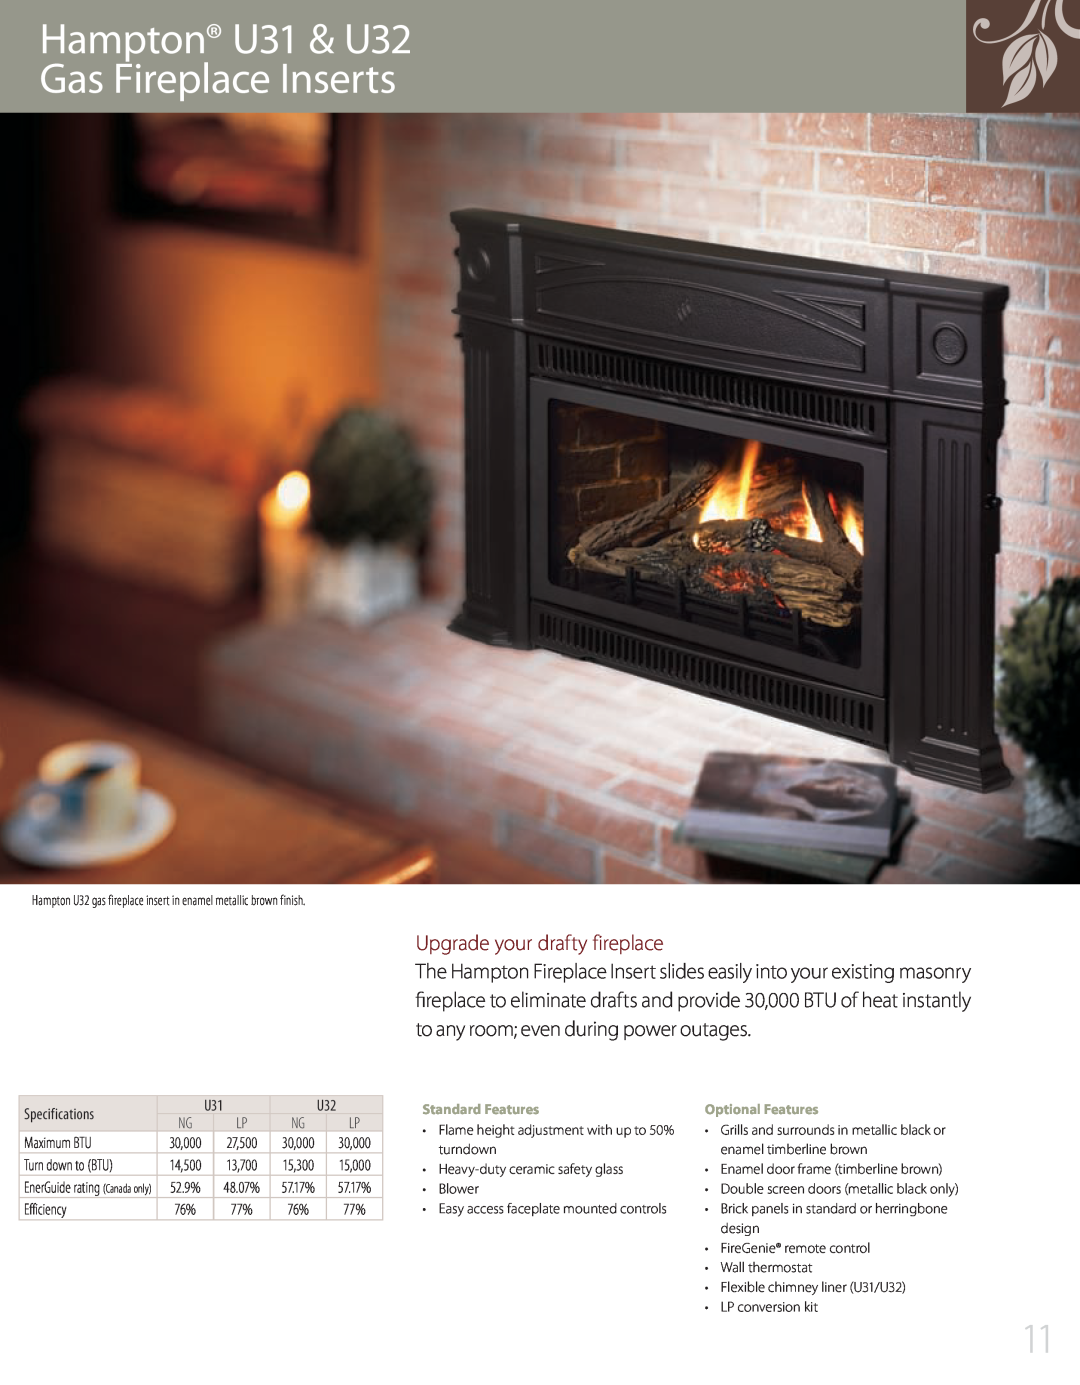 Regency H300 Hampton U31 & U32 Gas Fireplace Inserts, Upgrade your drafty fireplace, Standard Features, Optional Features 